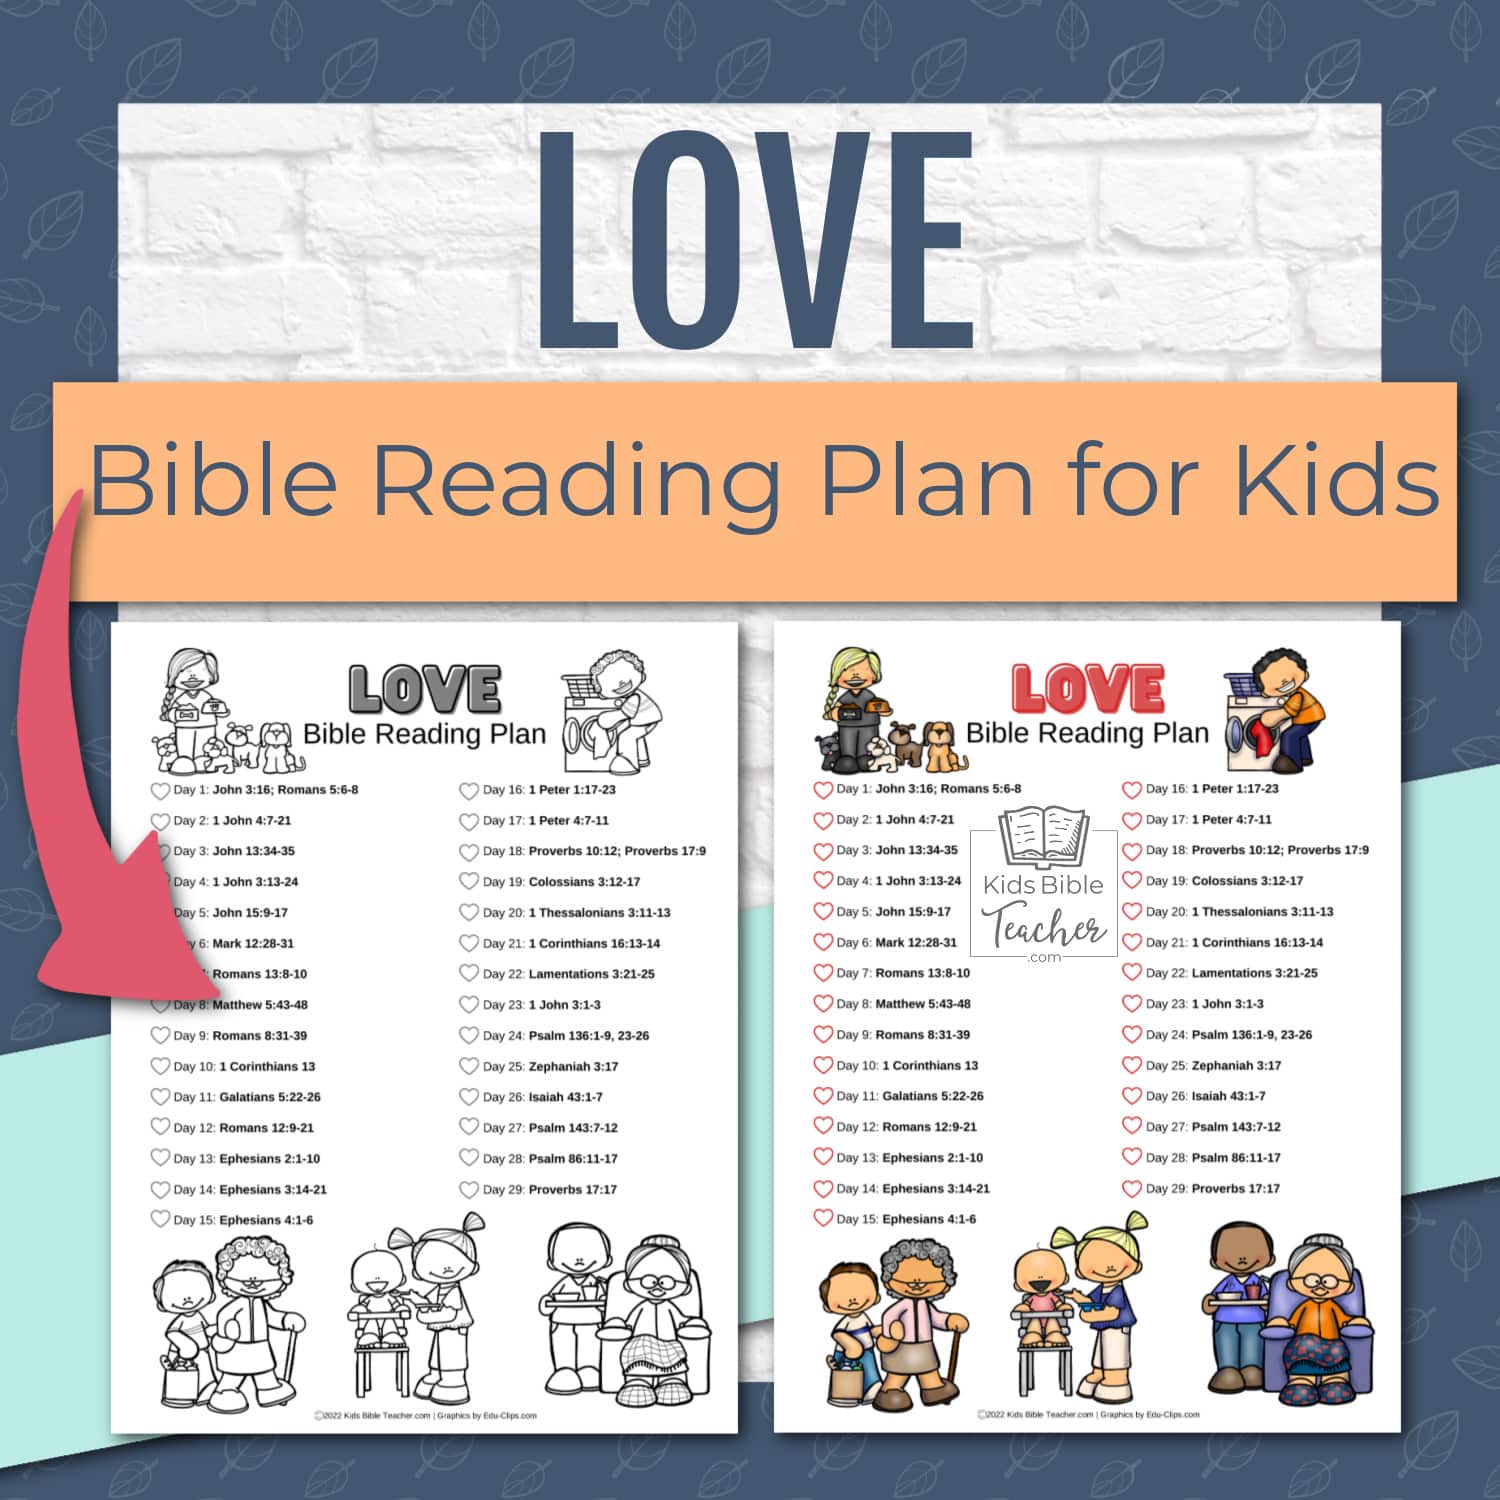 Love Bible Reading Plan for Kids